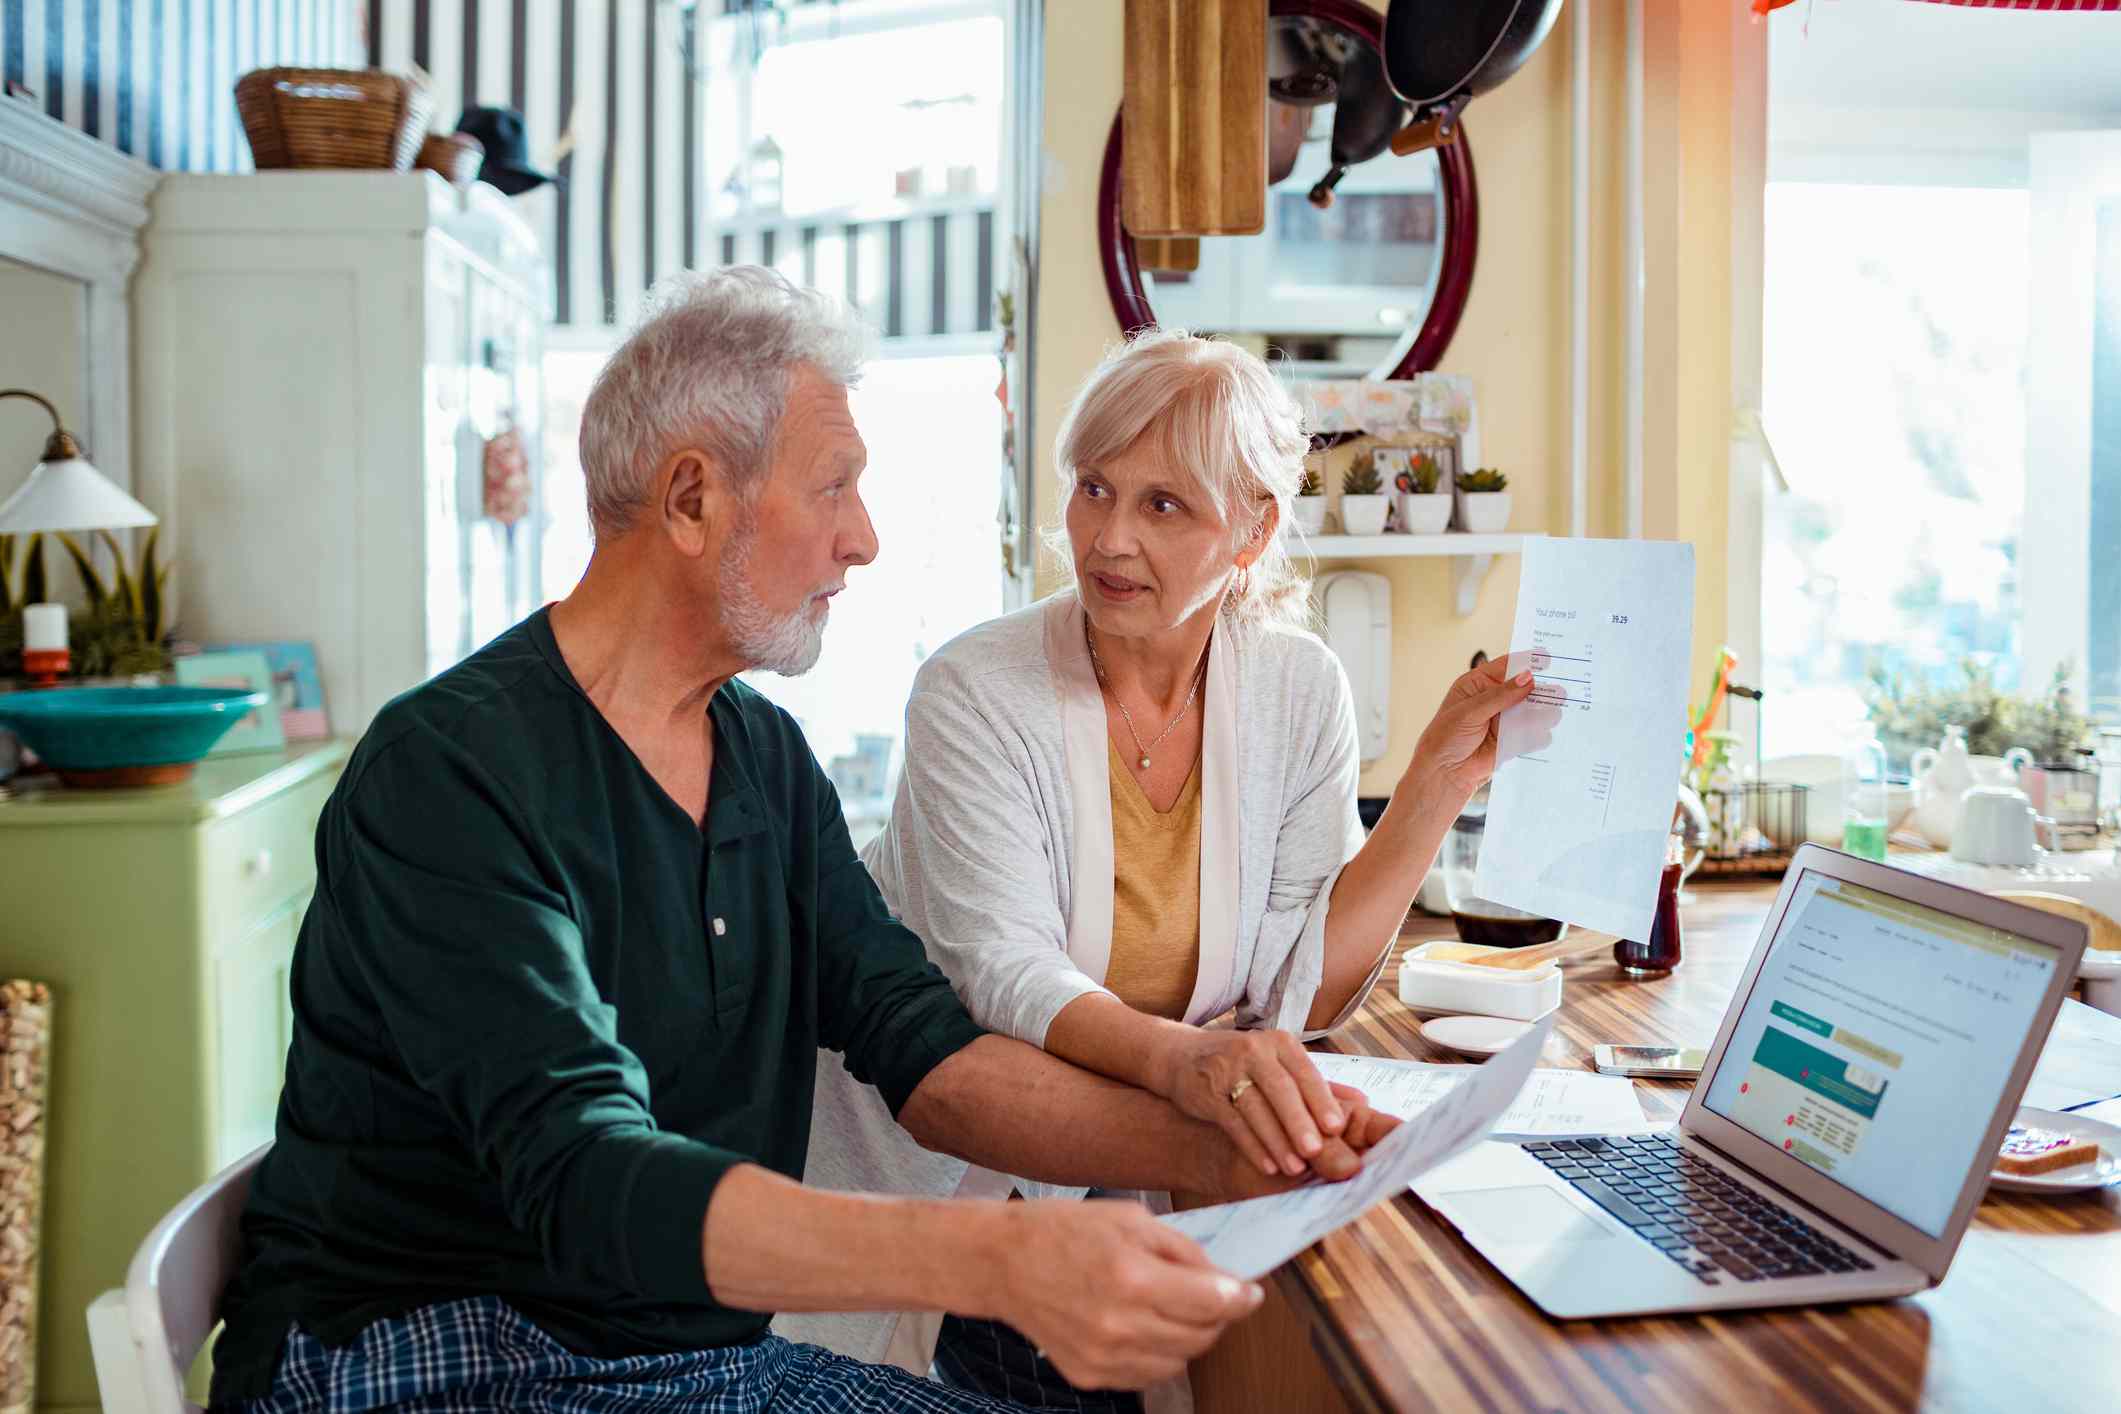 Couple reviews retirement plans at home using laptop